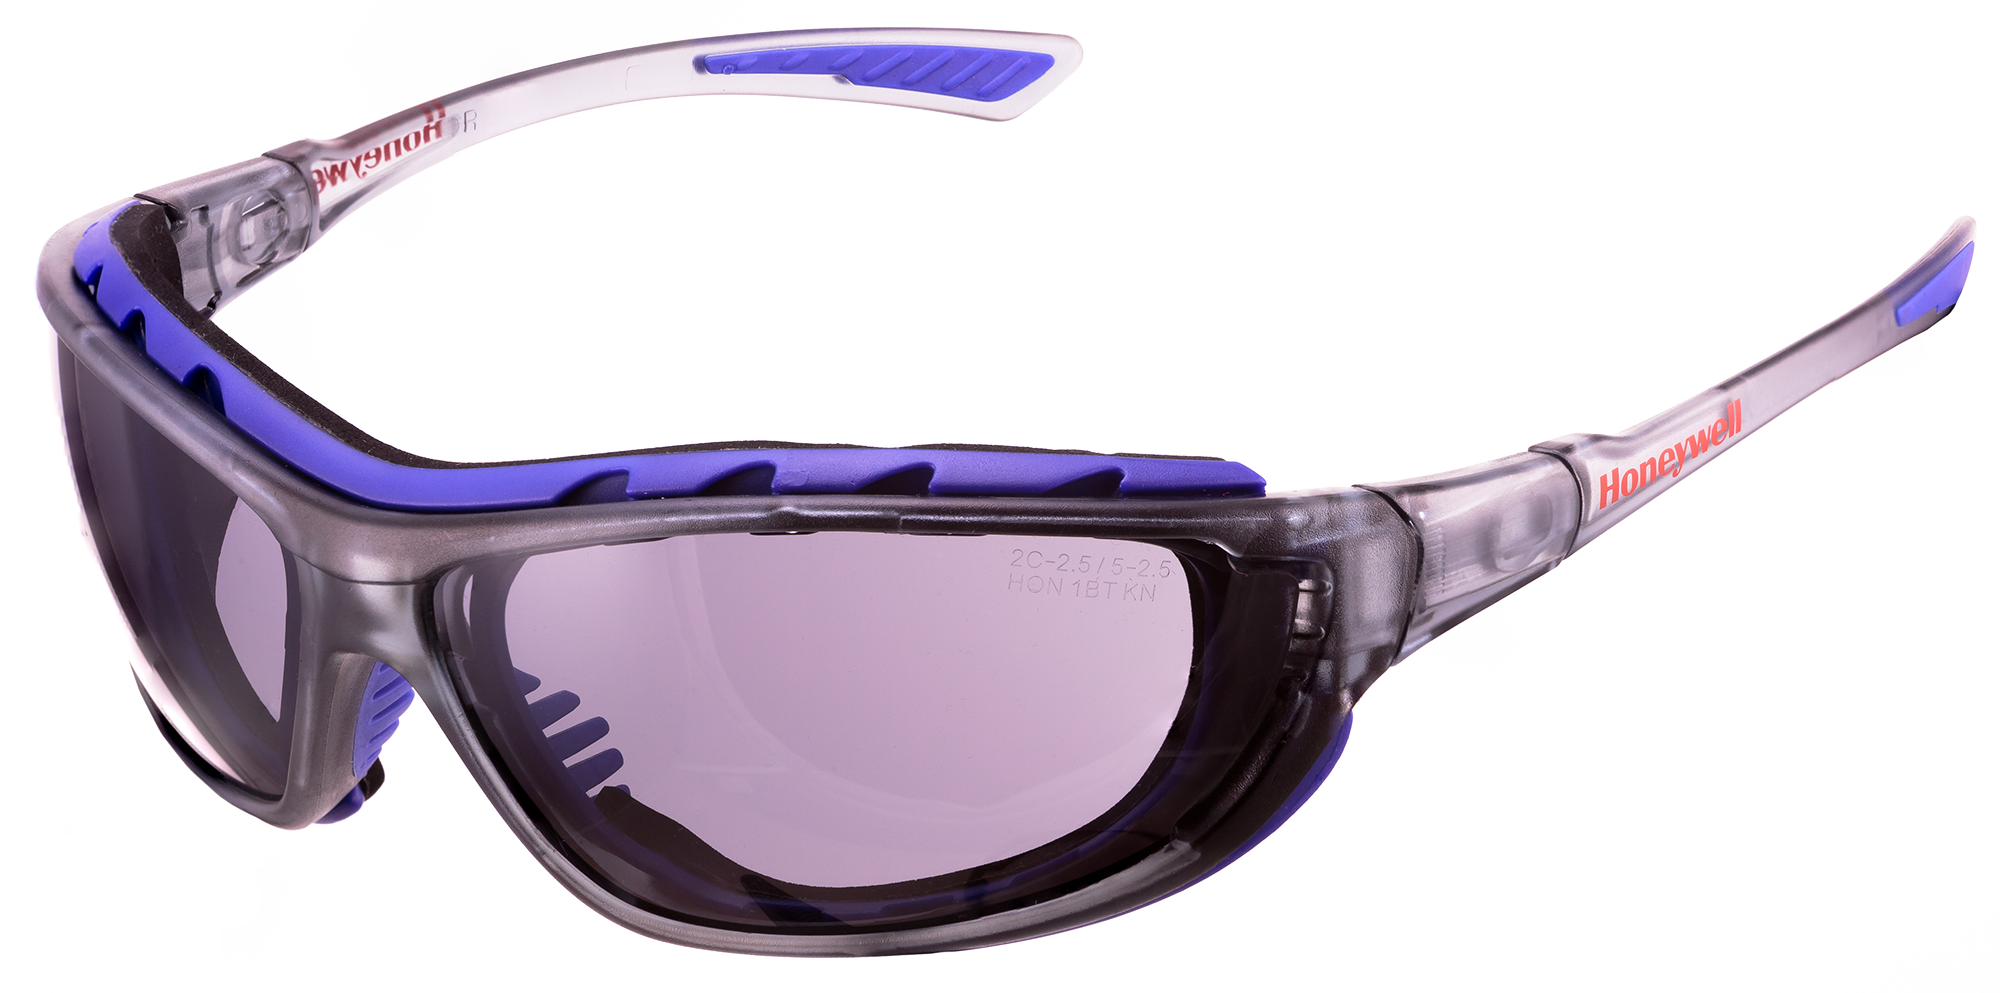 Honeywell Sp10002g Safety Glasses Goggles Smoky Lenses